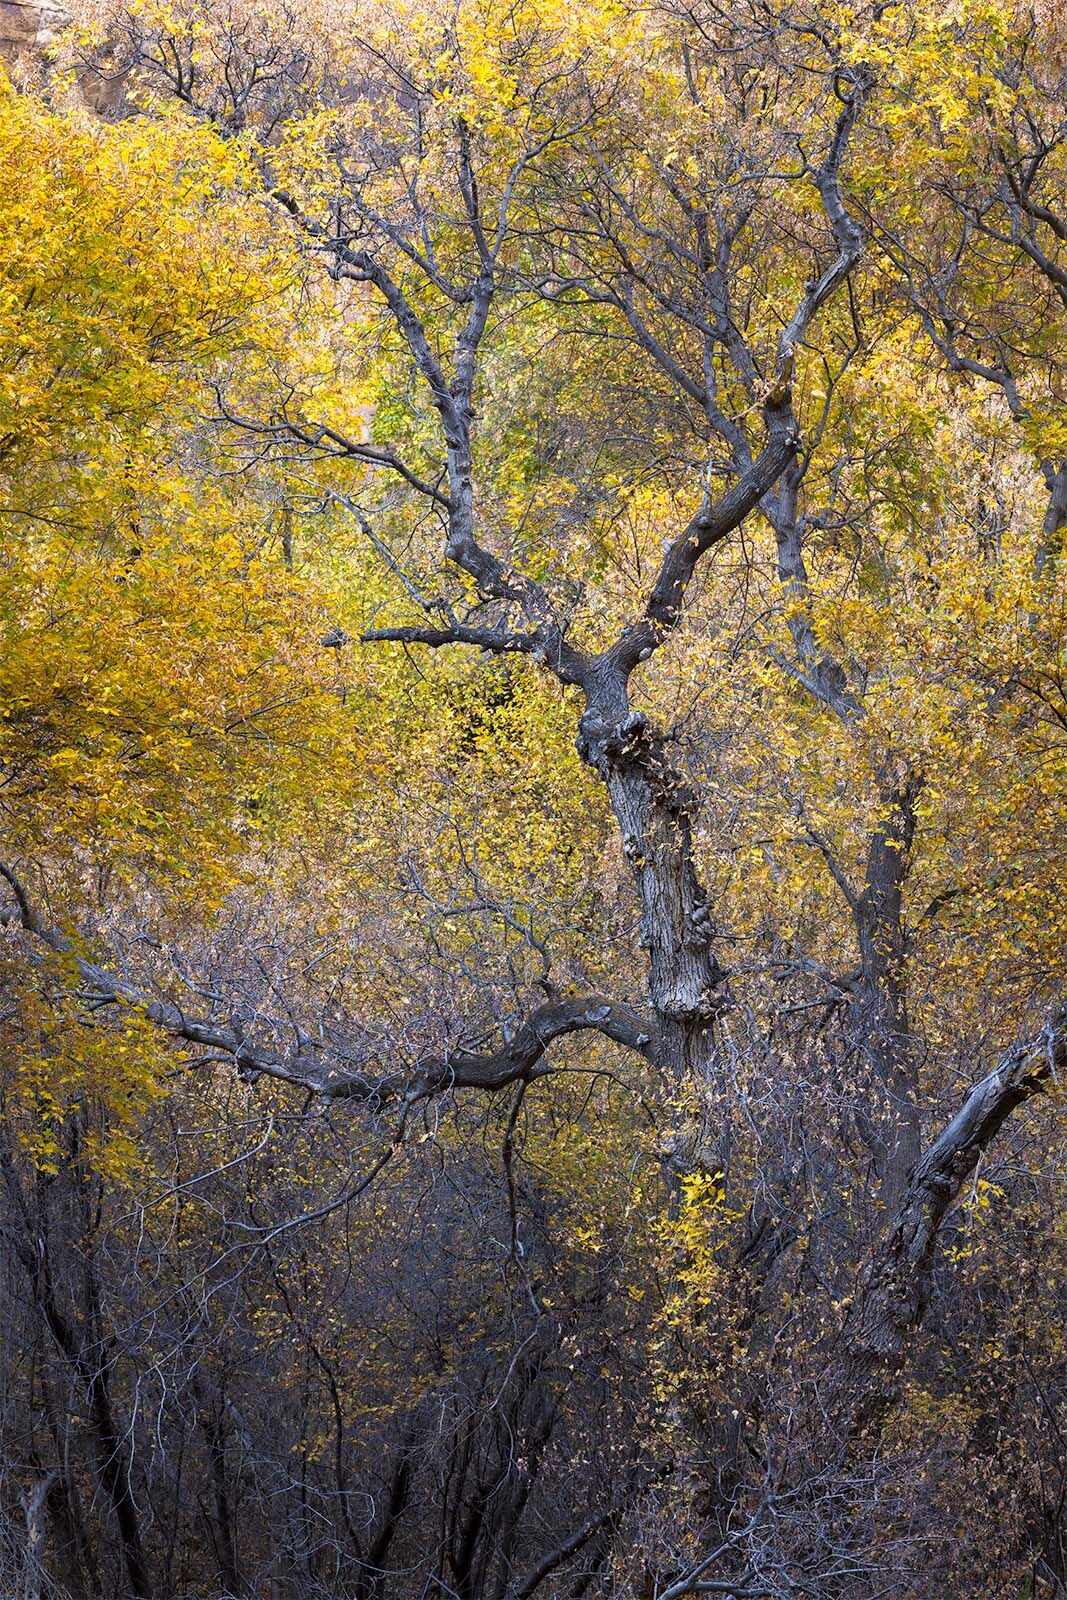 A tree skeleton amongst fall-colored leaves